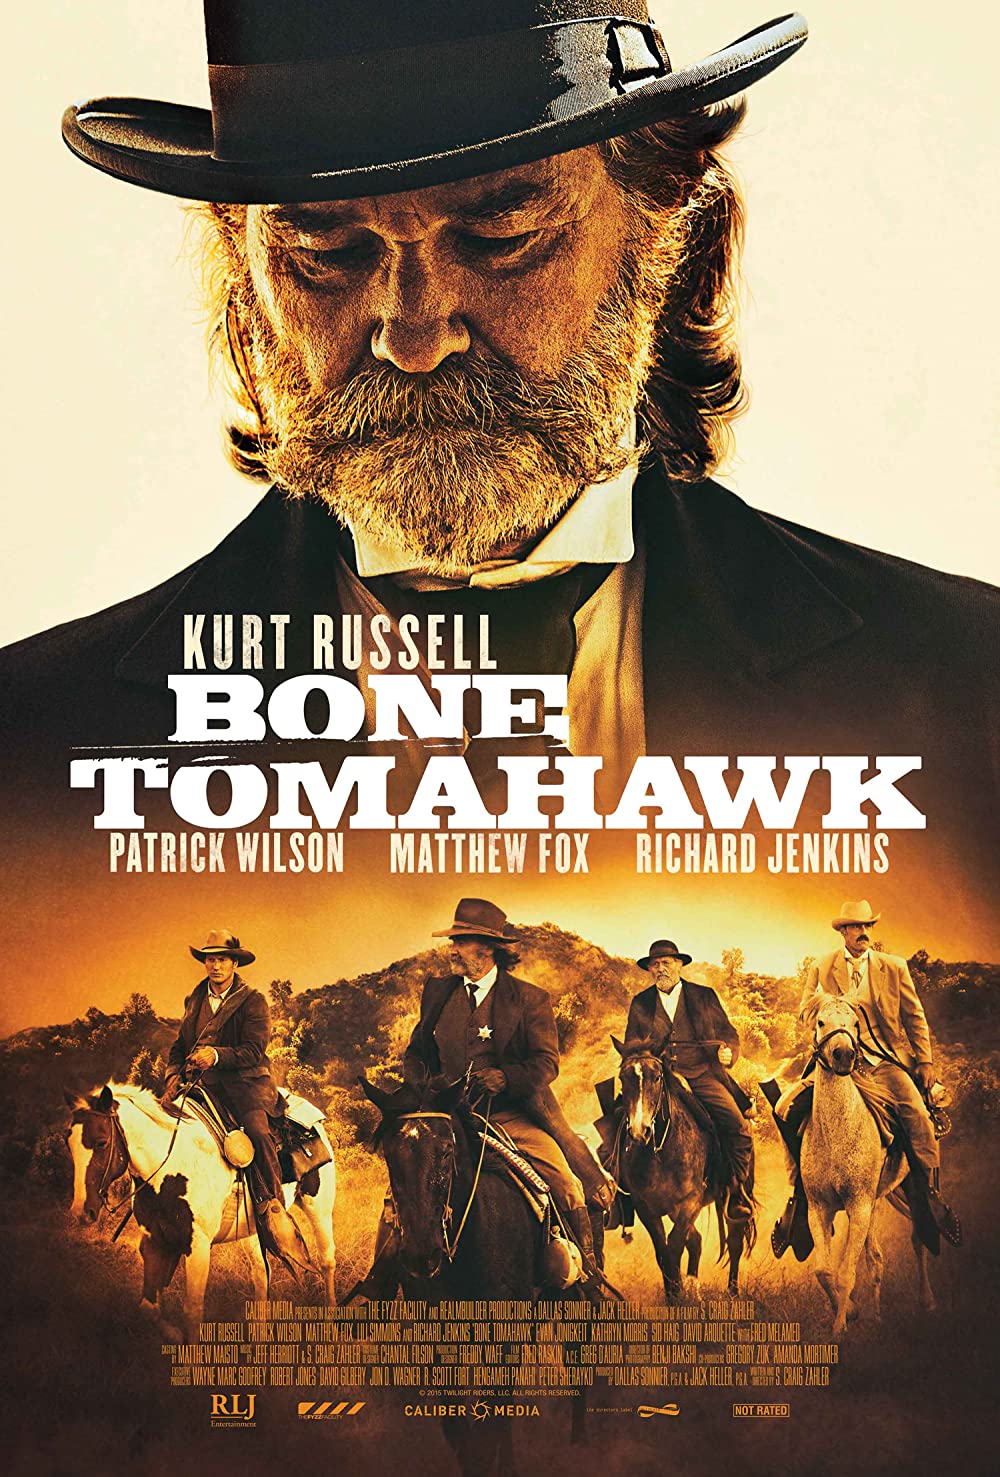 Filmbeschreibung zu Bone Tomahawk